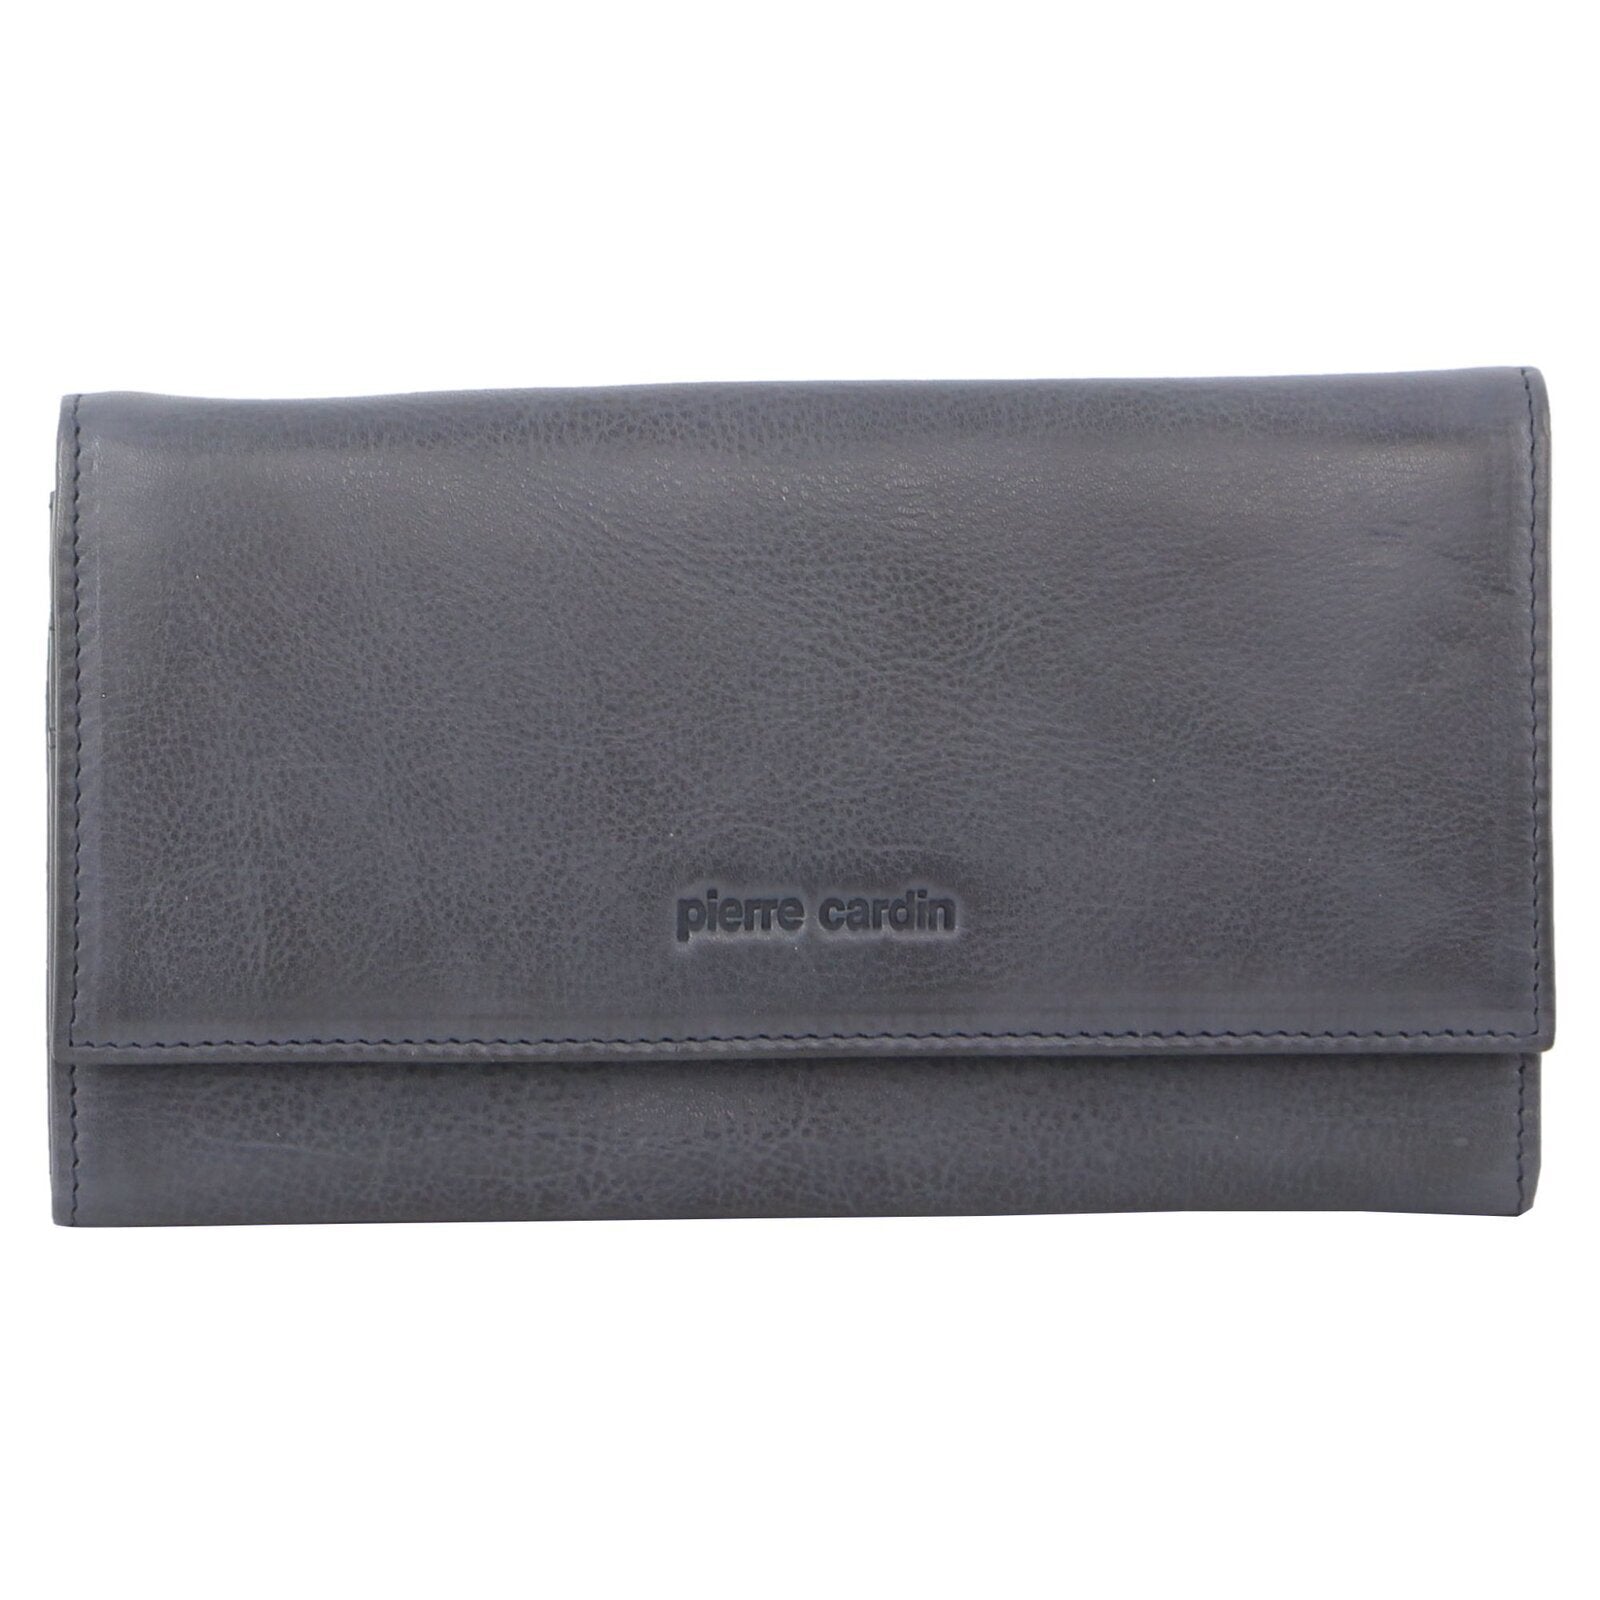 Pierre Cardin Womens Soft Italian Leather RFID Purse Wallet - Teal - SILBERSHELL